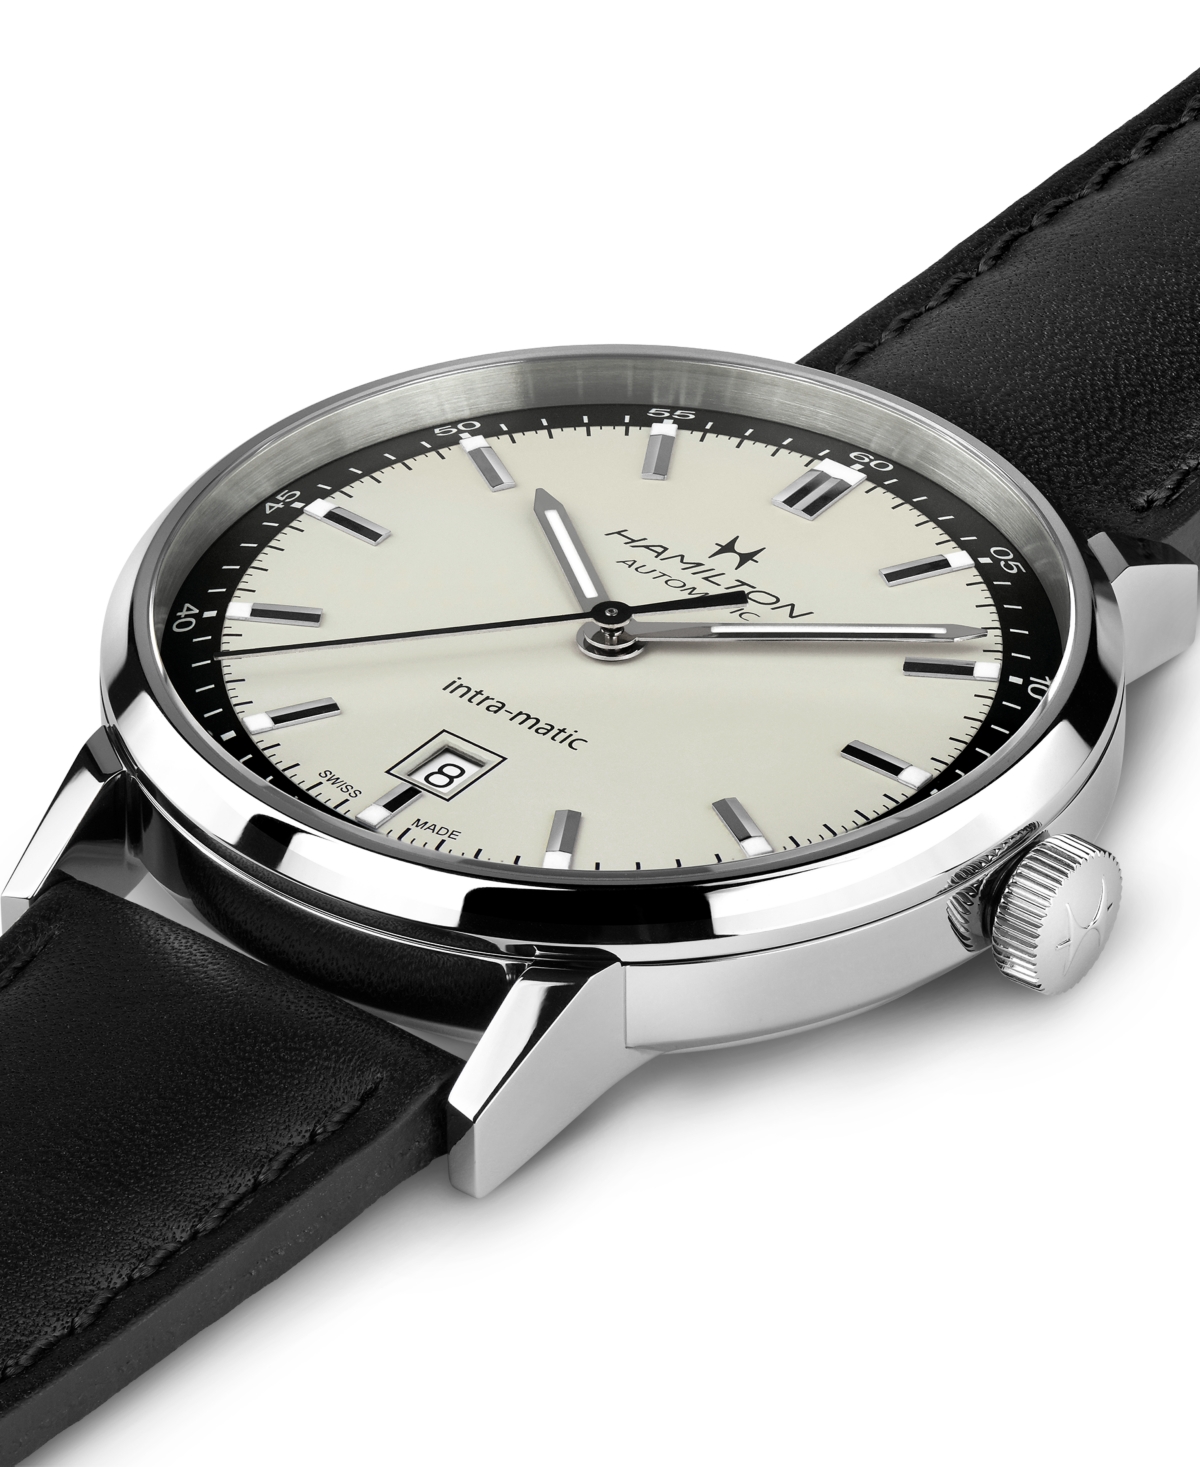 Shop Hamilton Men's Swiss Automatic Intra-matic Black Leather Strap Watch 40mm